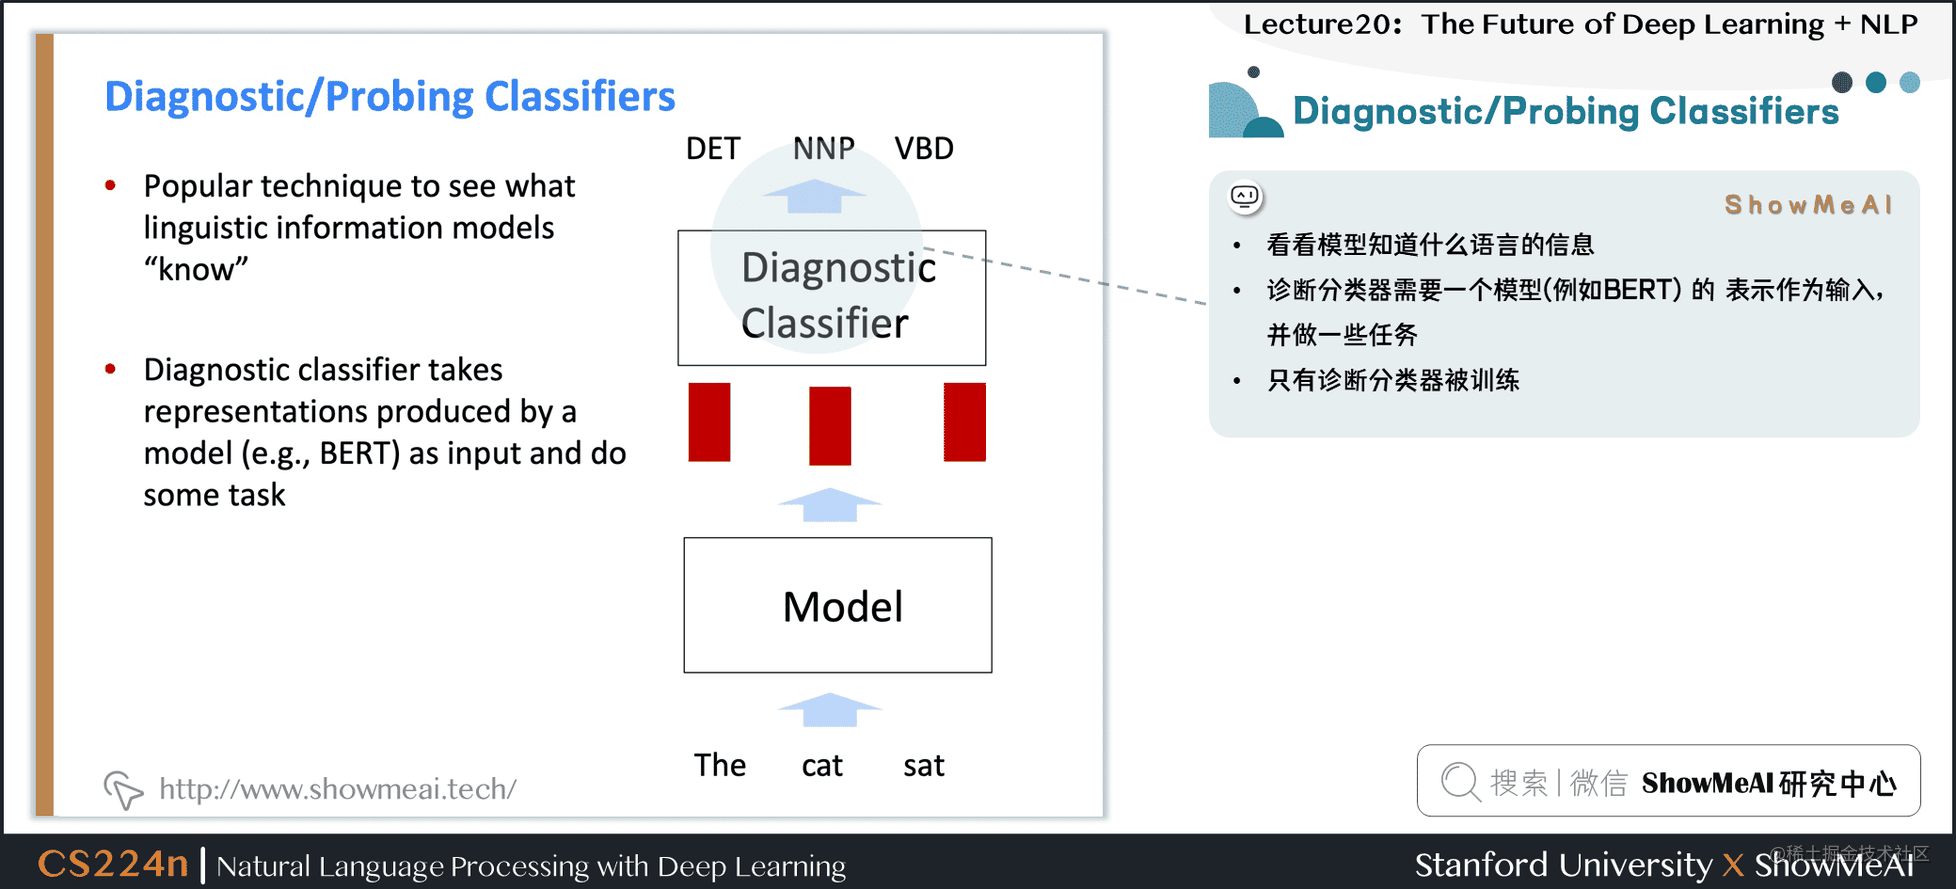 Diagnostic/Probing Classifiers